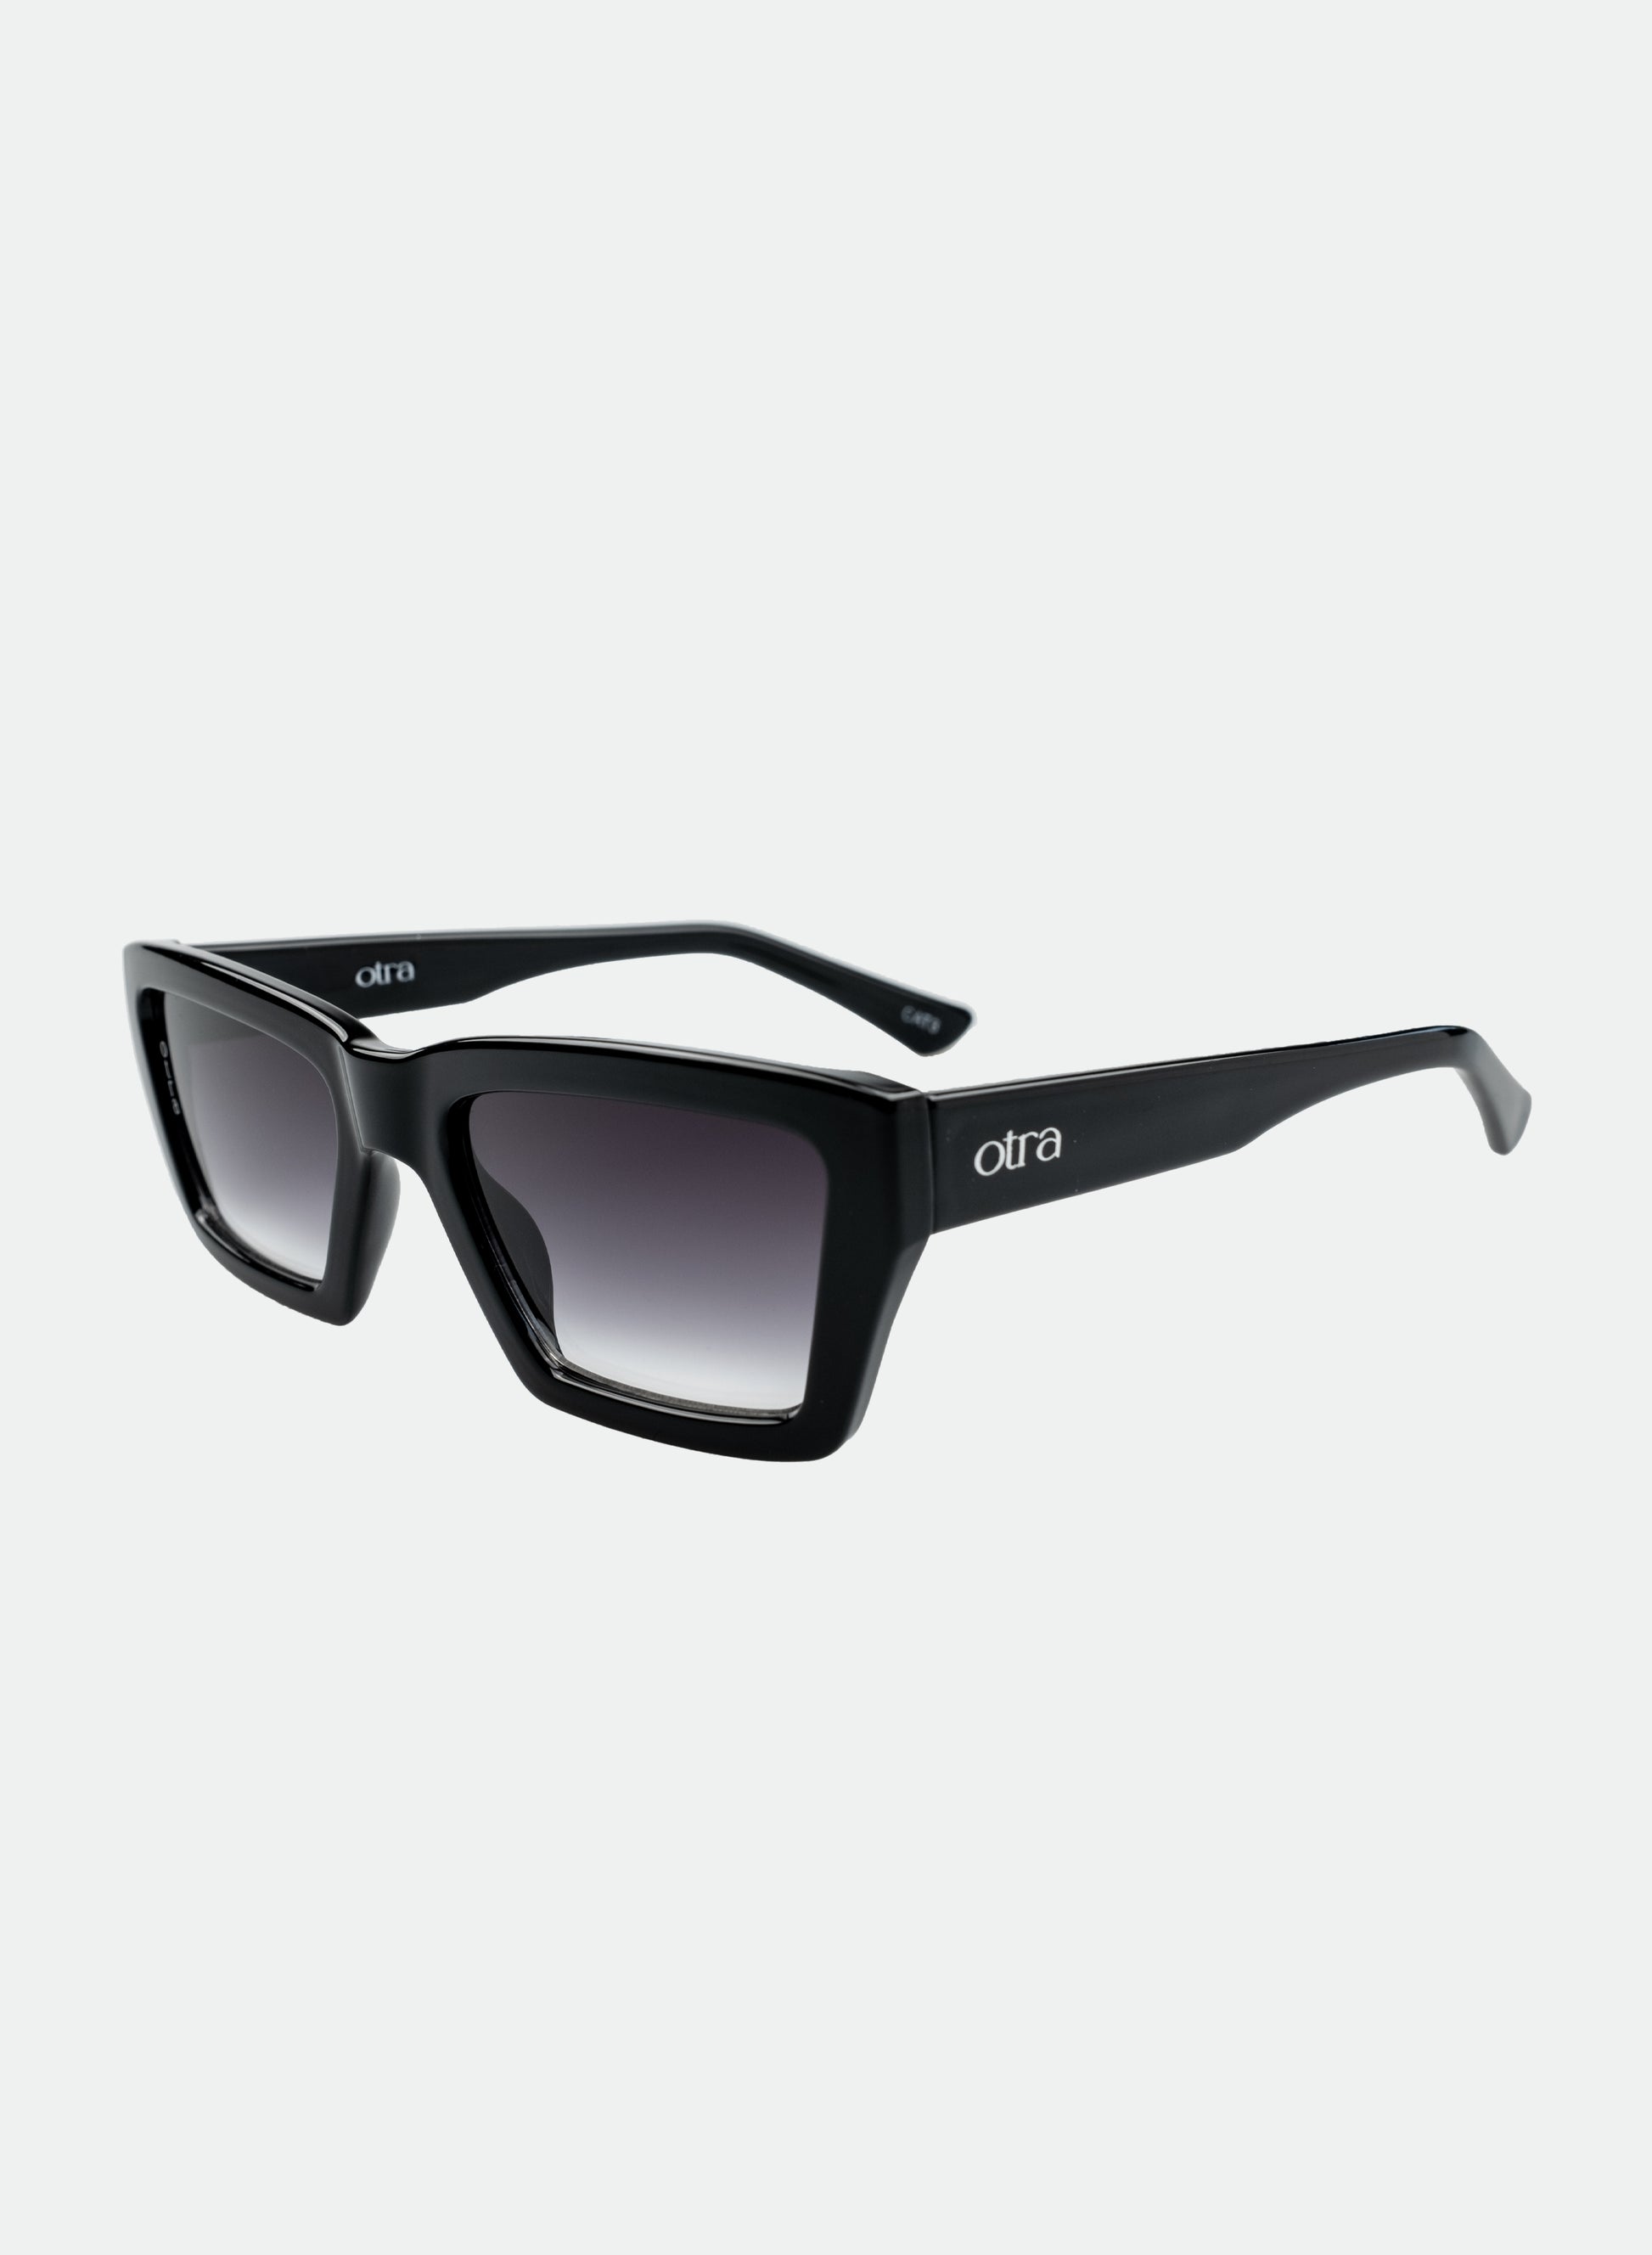 Fairfax sunglasses black side view